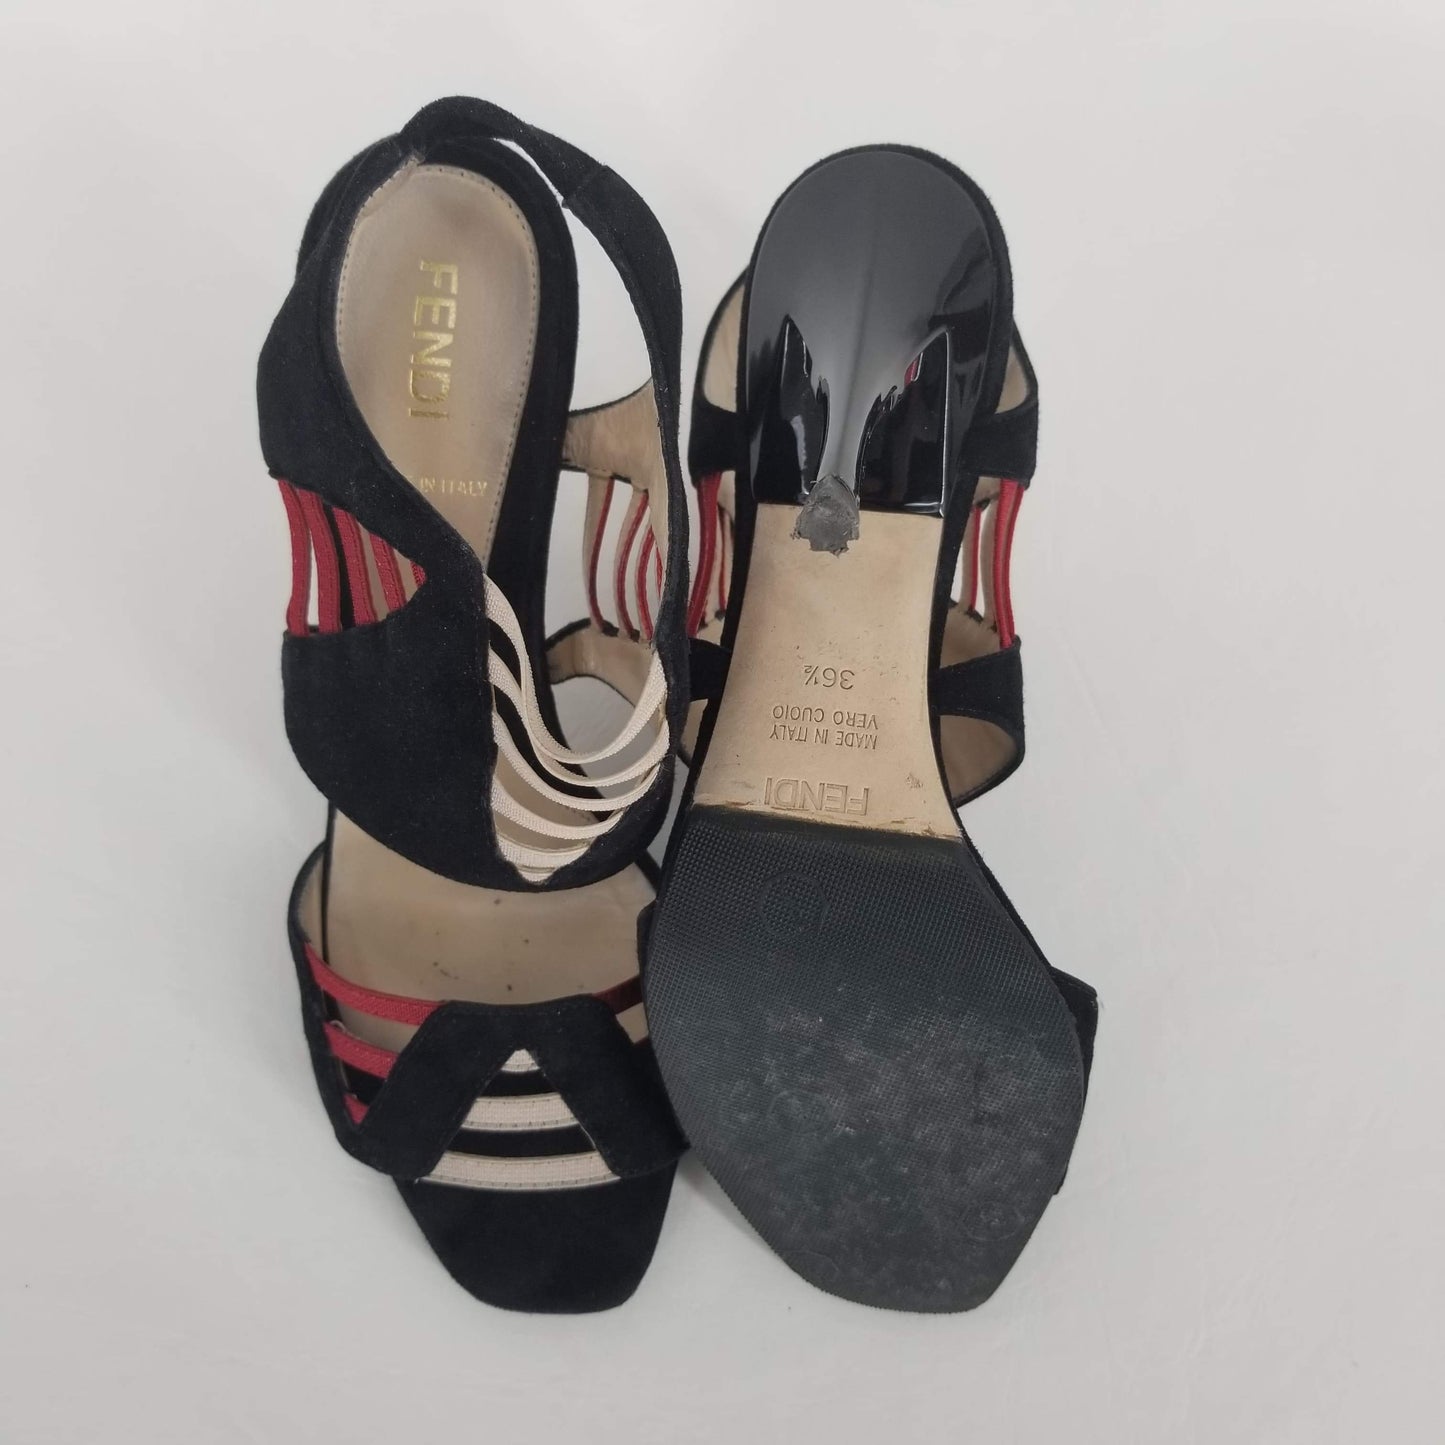 Authentic Fendi Black/Burgundy/Beige Suede Sandals